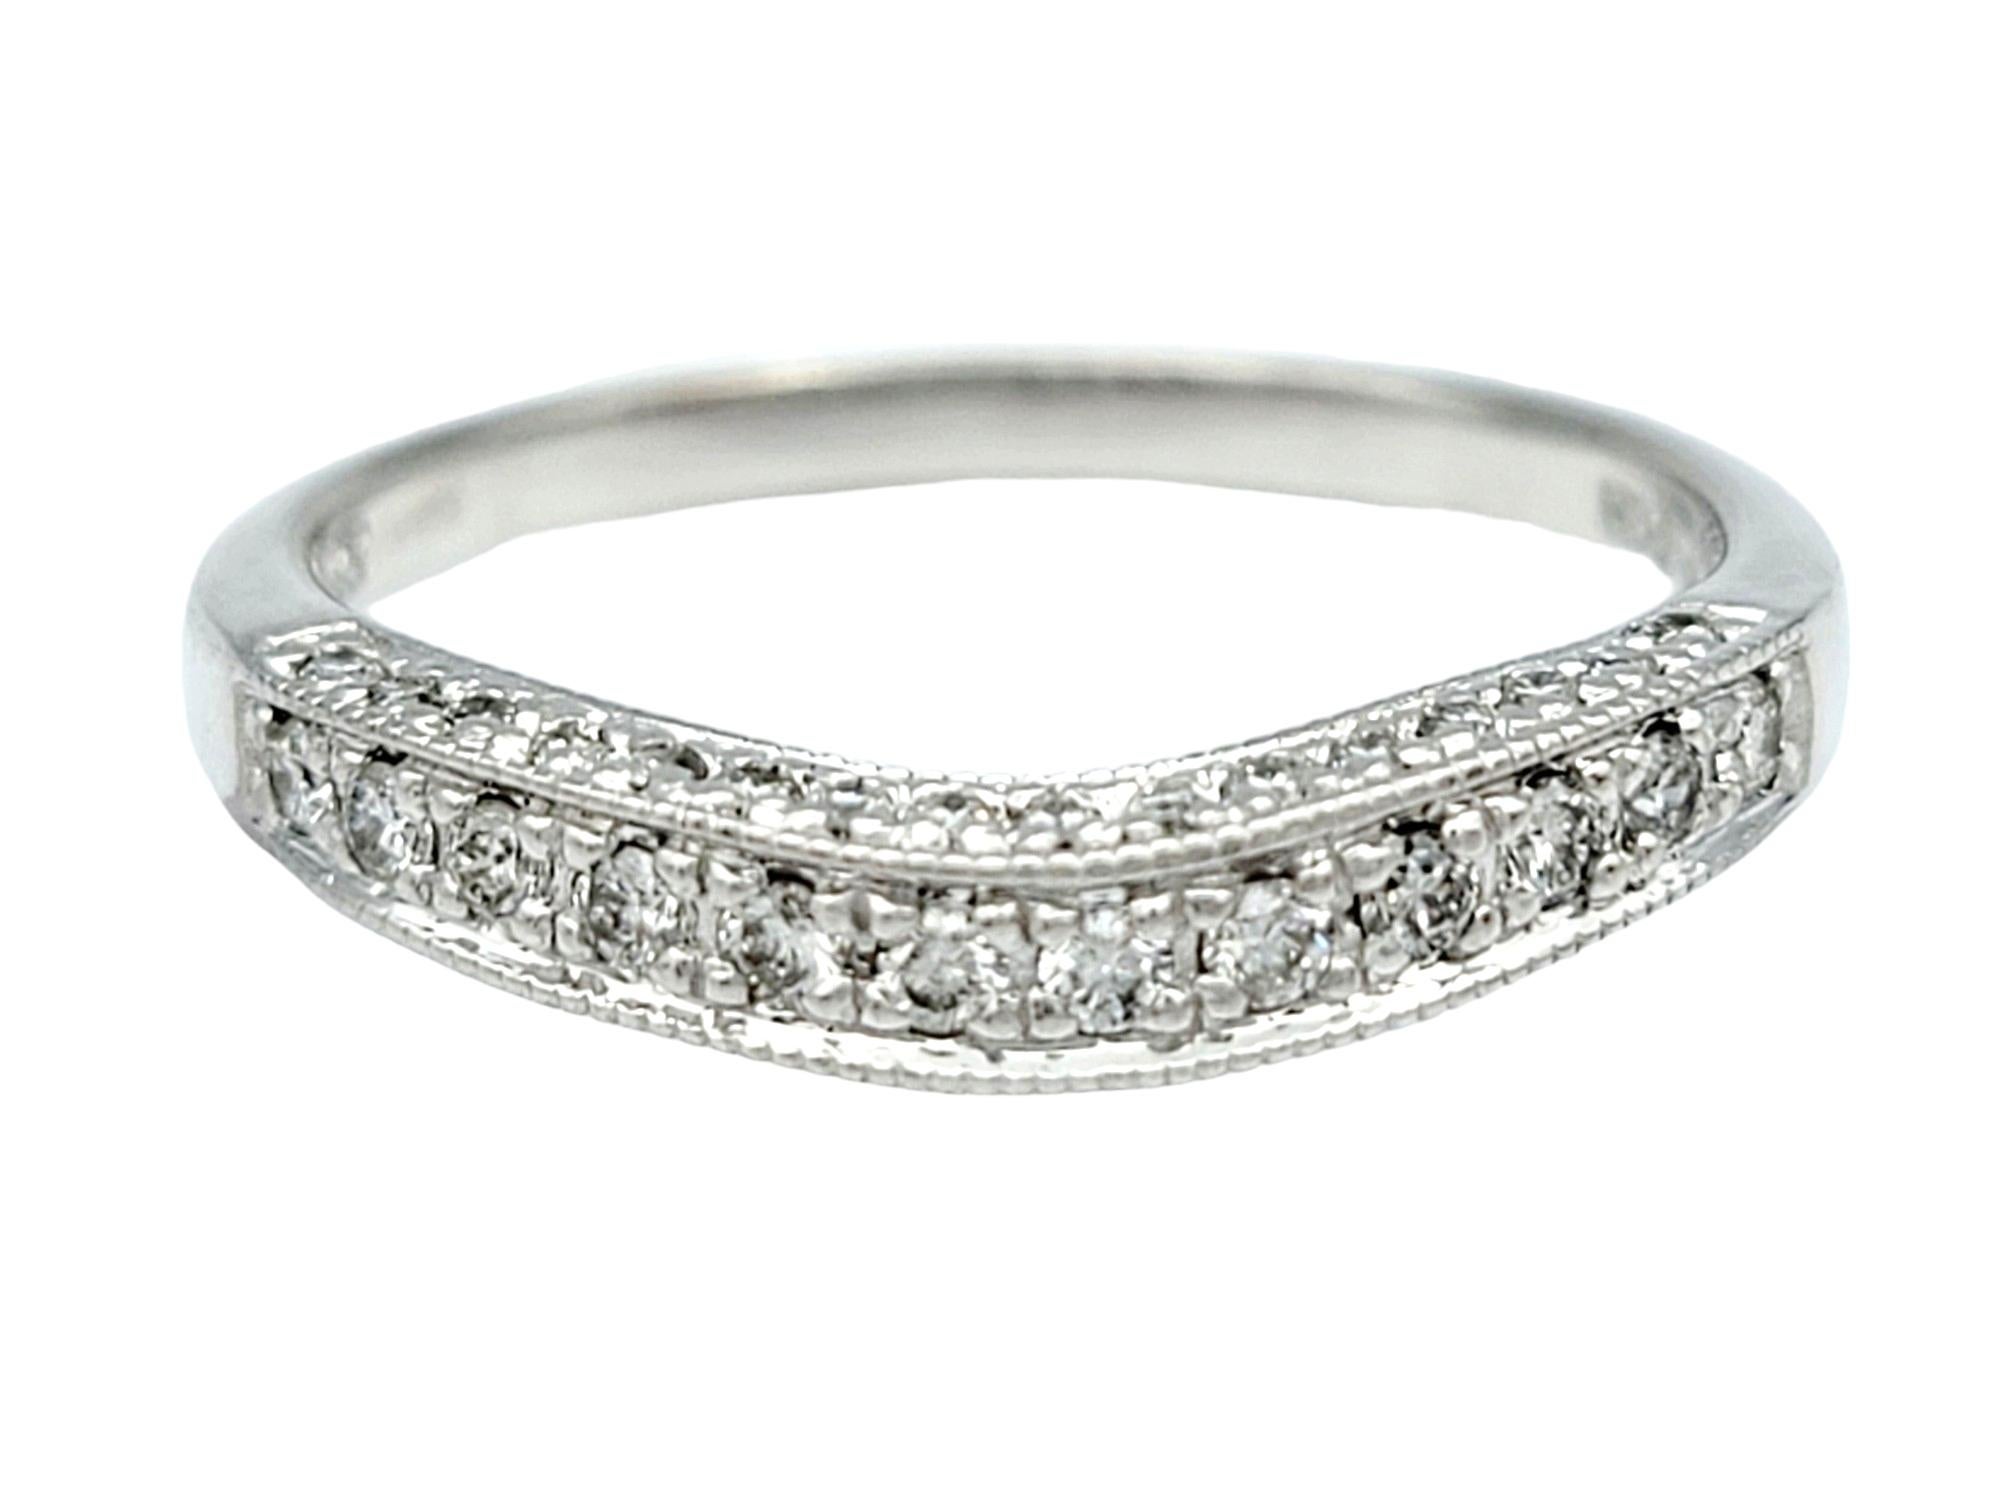 Pavé Diamond Halo Style Wedding Ring Set with Milgrain in 14 Karat White Gold In Good Condition For Sale In Scottsdale, AZ